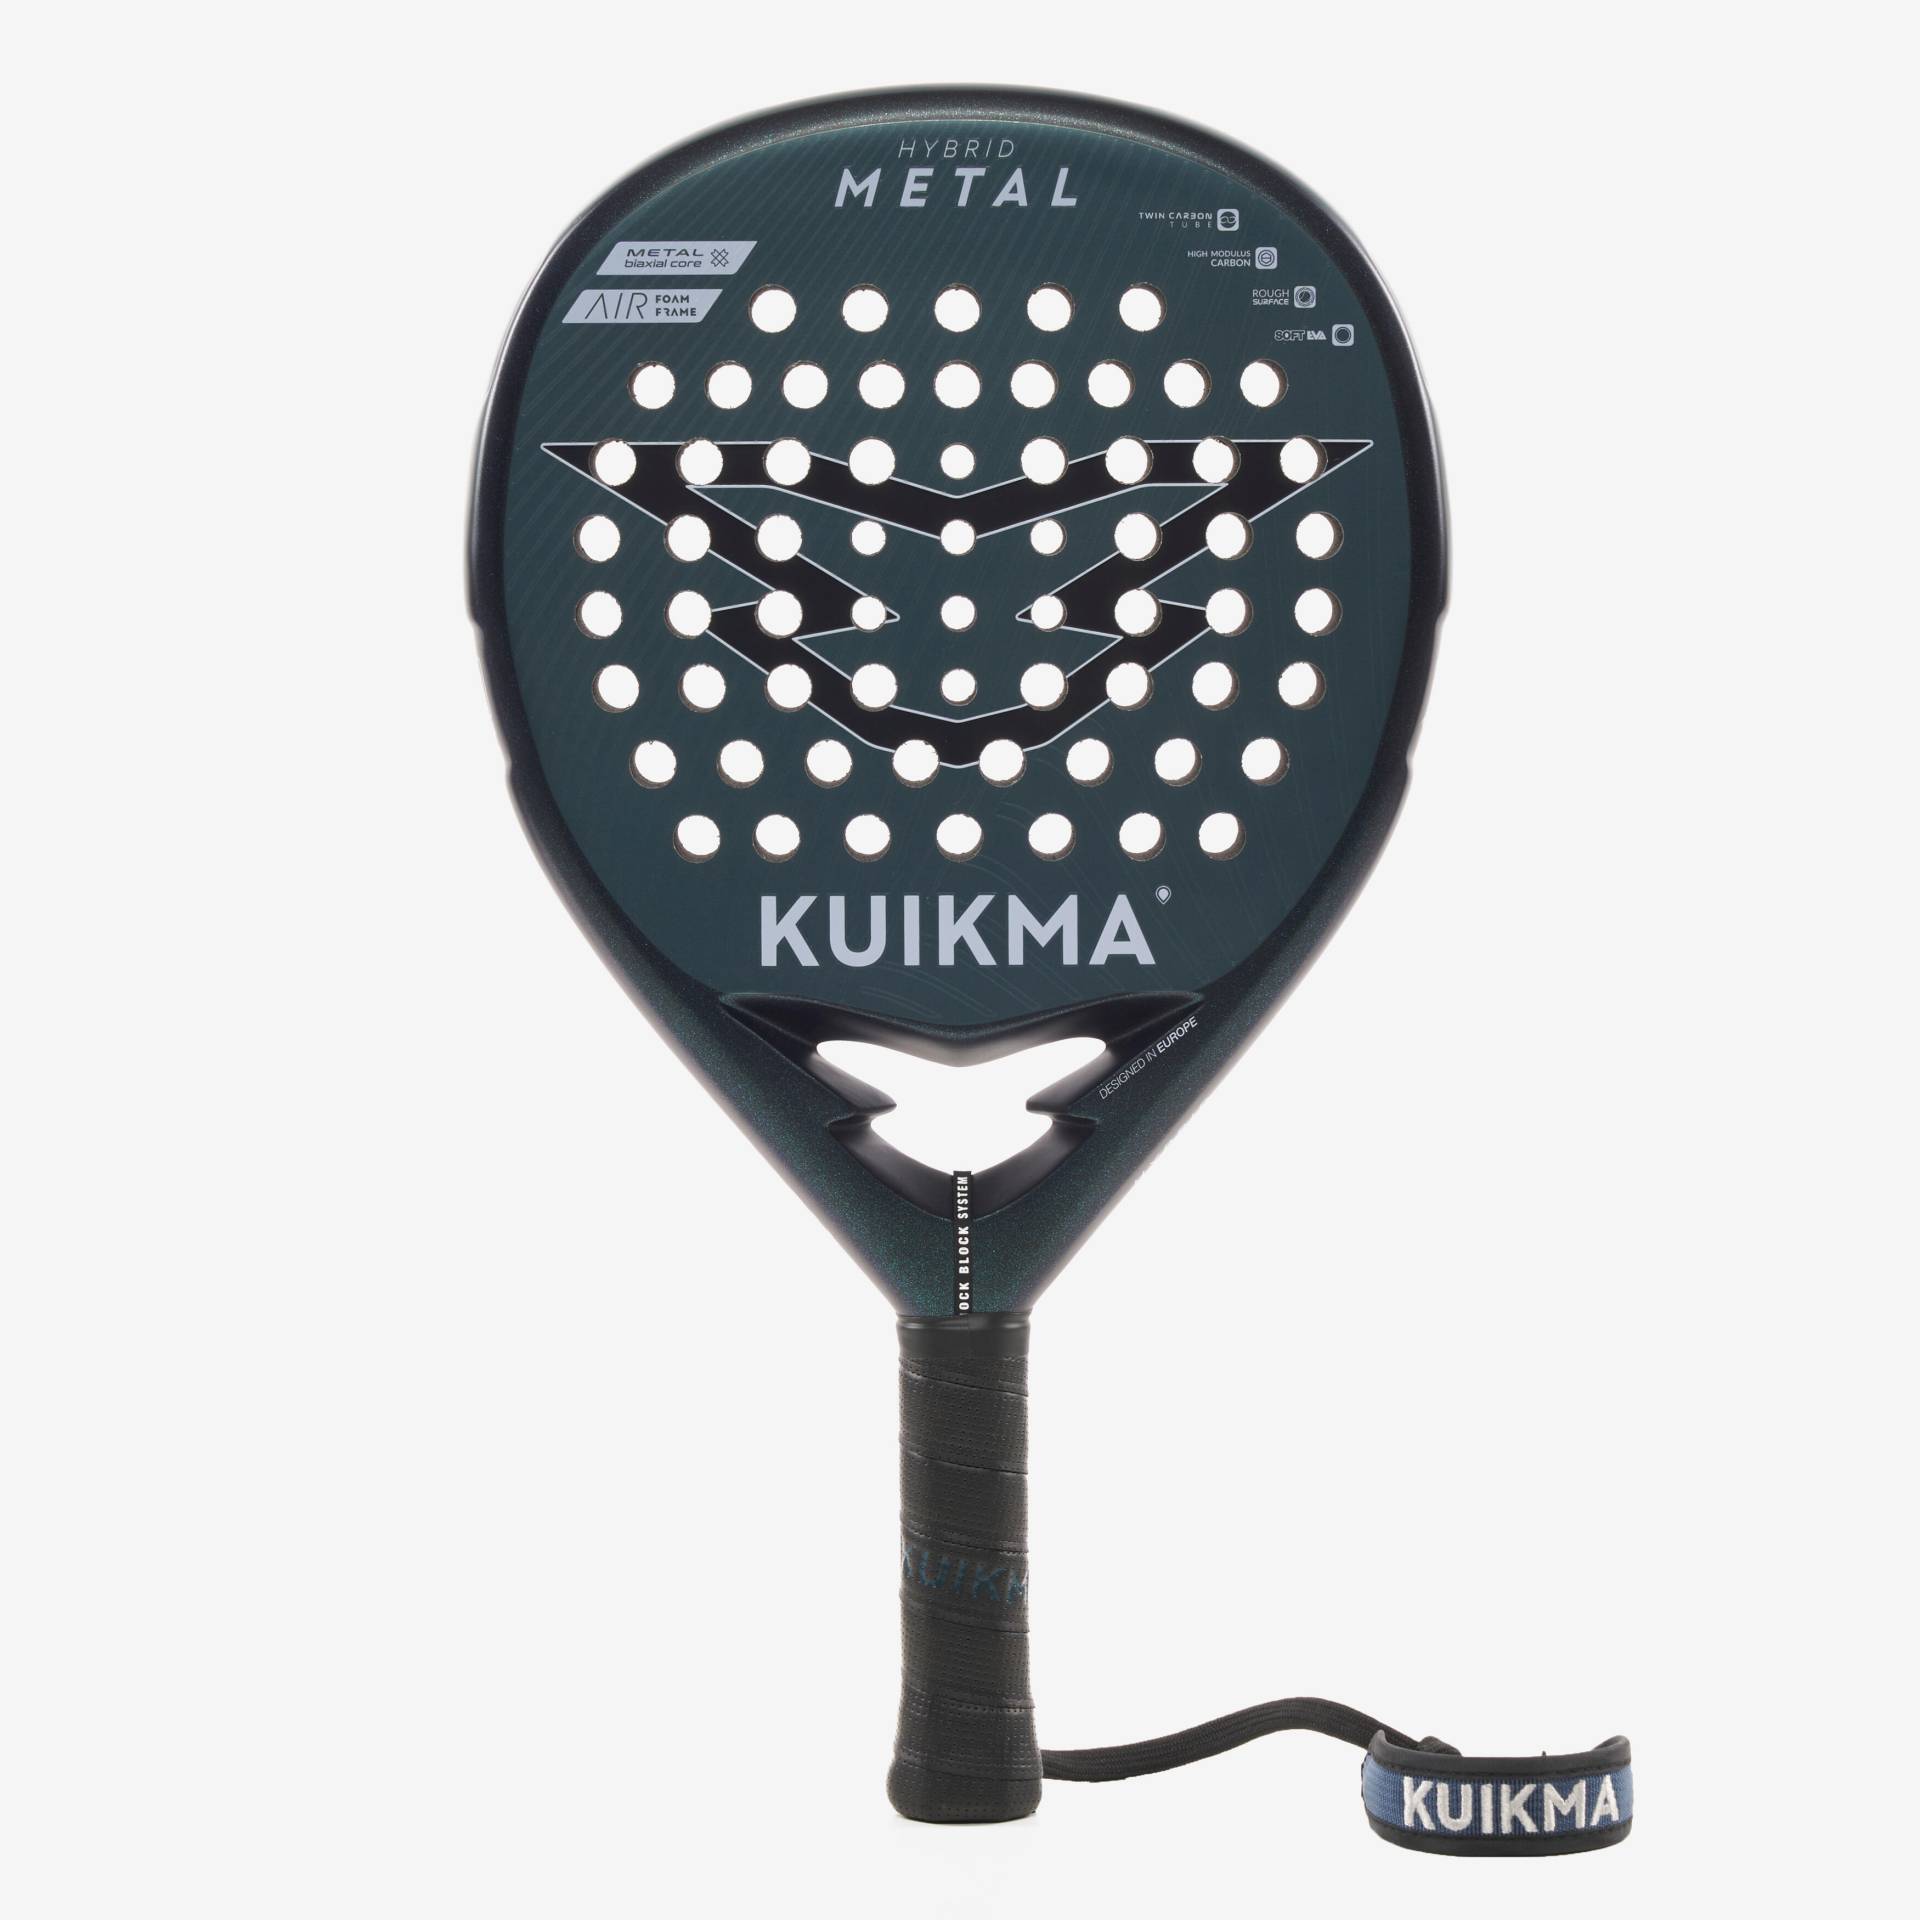 Padelschläger Erwachsene Kuikma - Hybrid Metal von KUIKMA